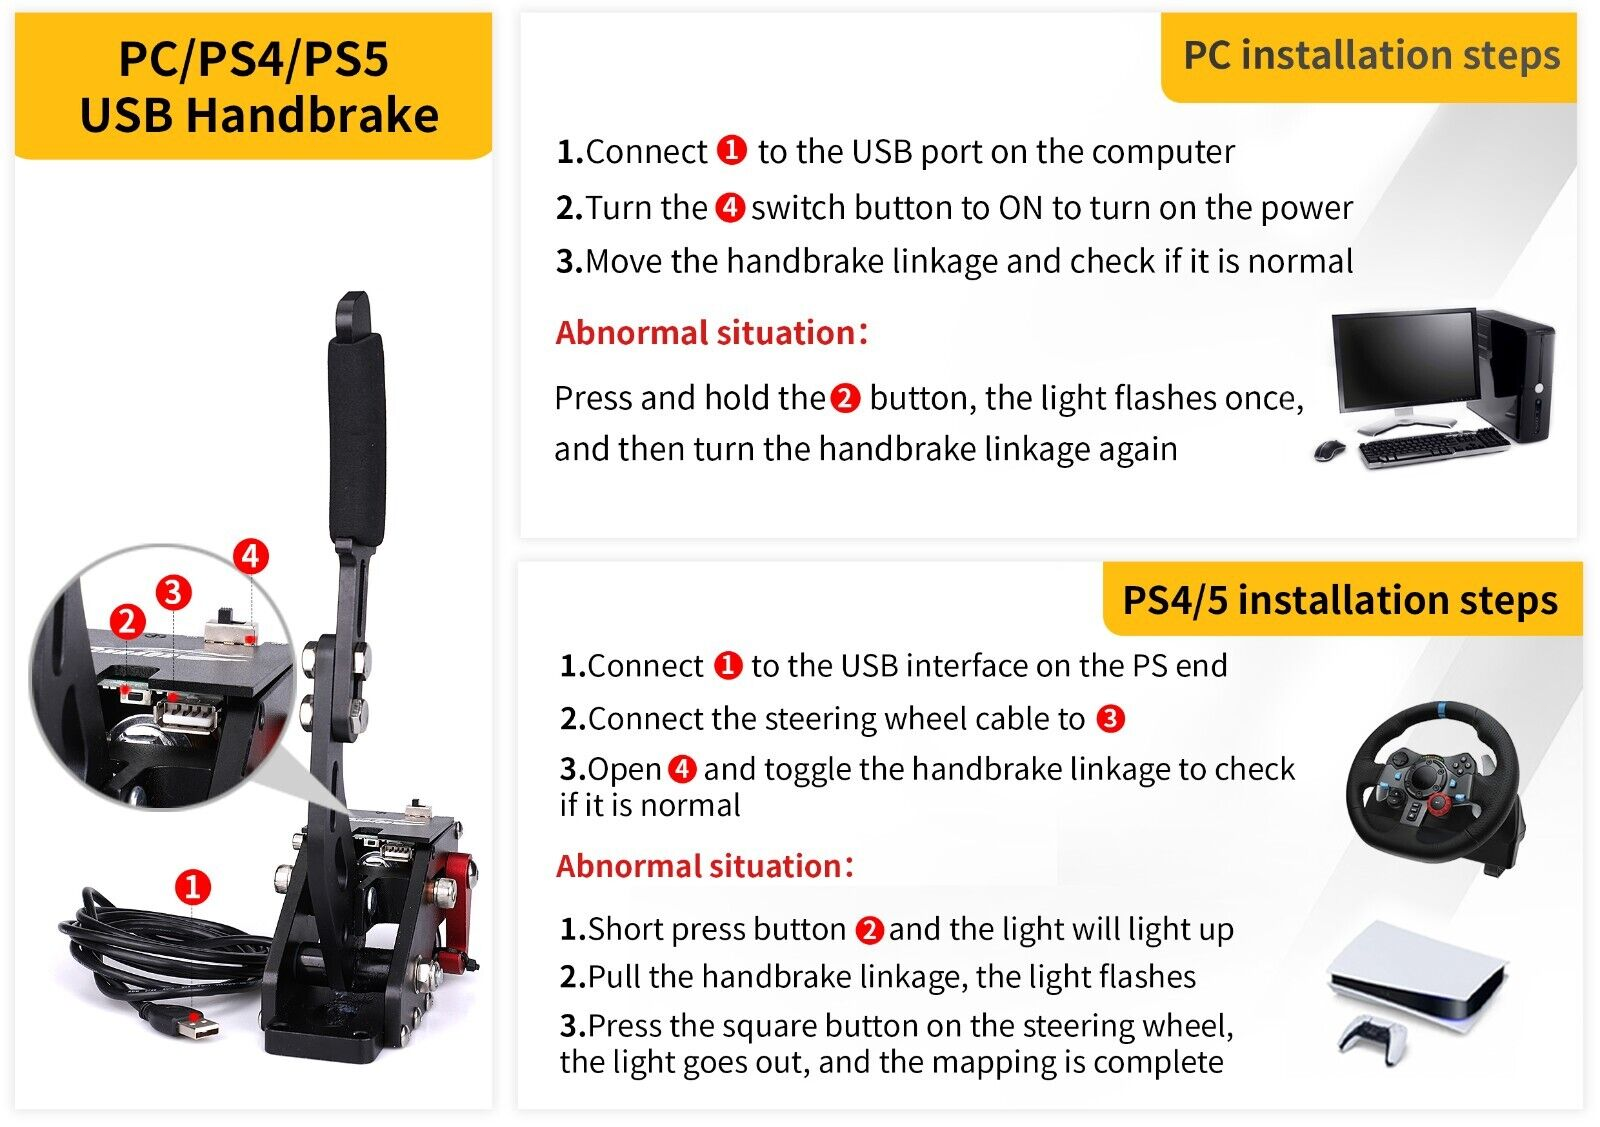 14Bit PS4/PS5 USB Handbrake Kits for Racing Games Steering Wheel